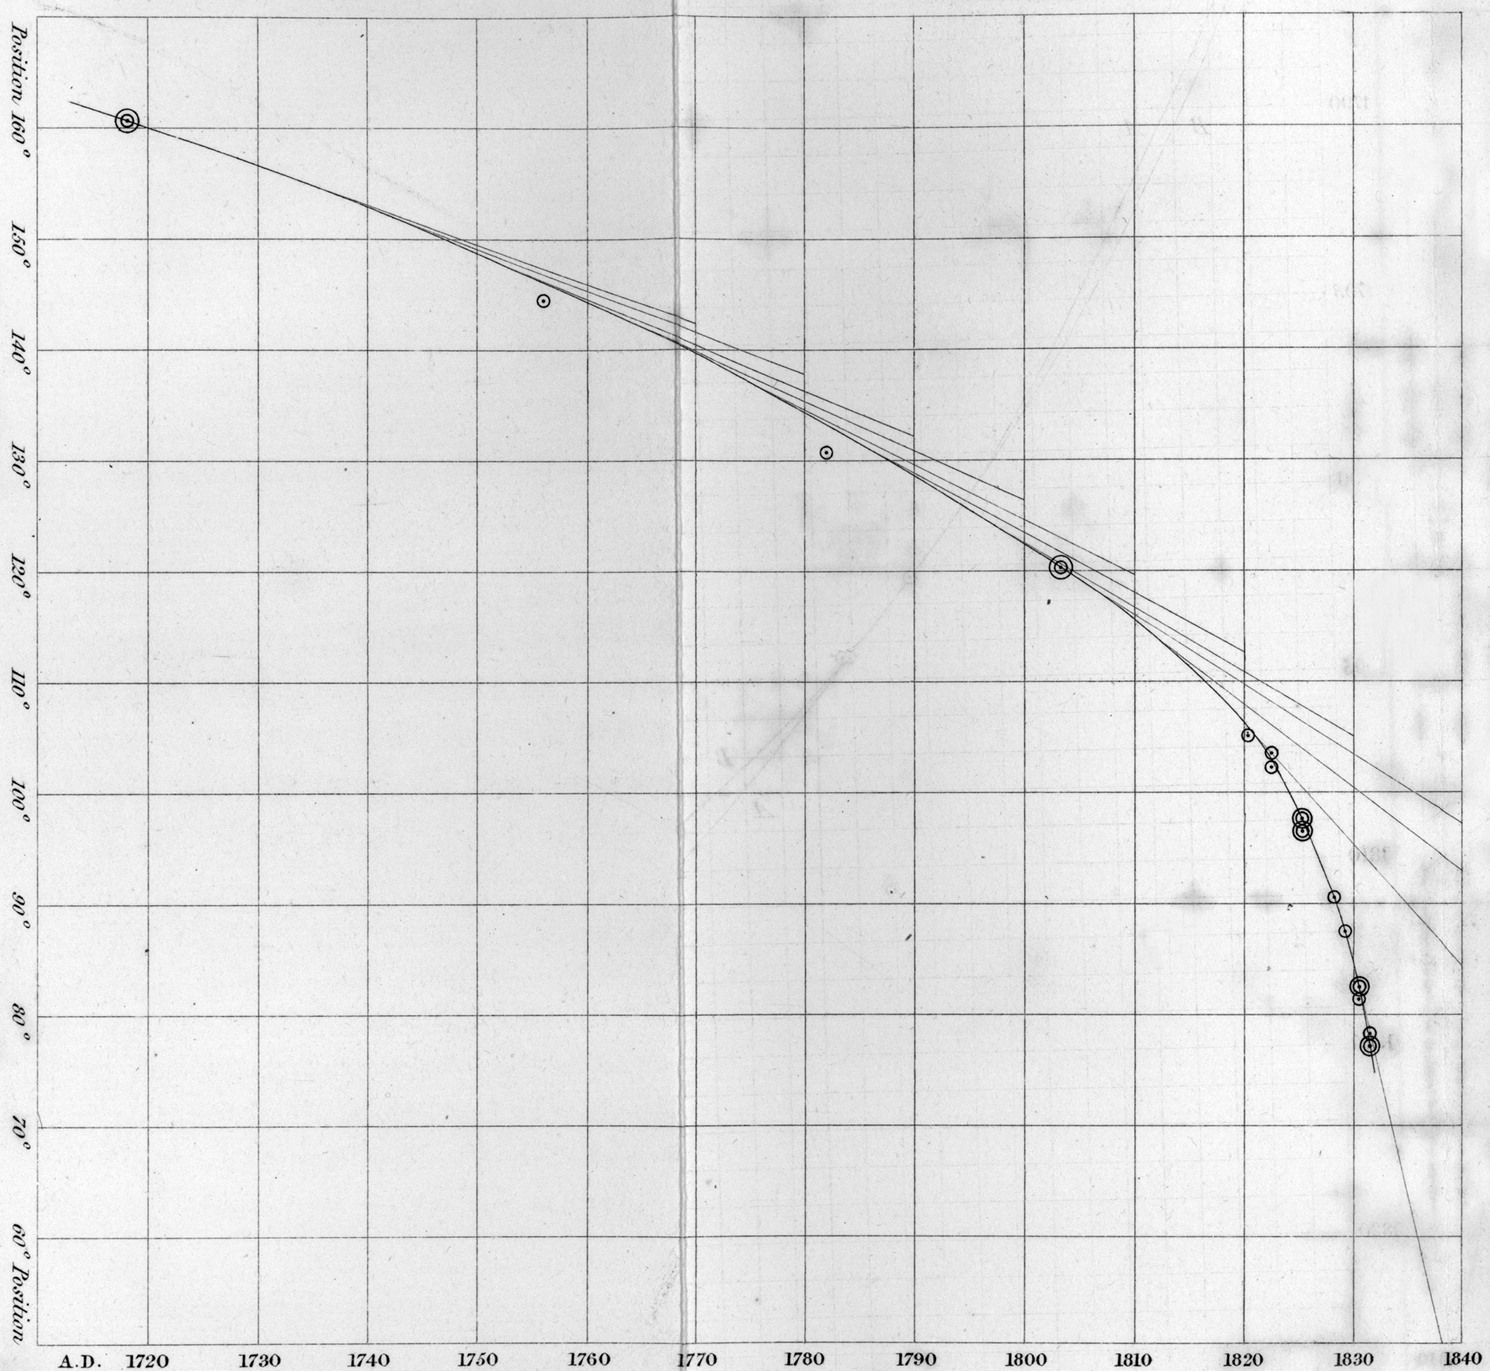 Herschel’s first scatterplot: Herschel’s graphical method applied to his data on the double star <U+03B3> Virginis.